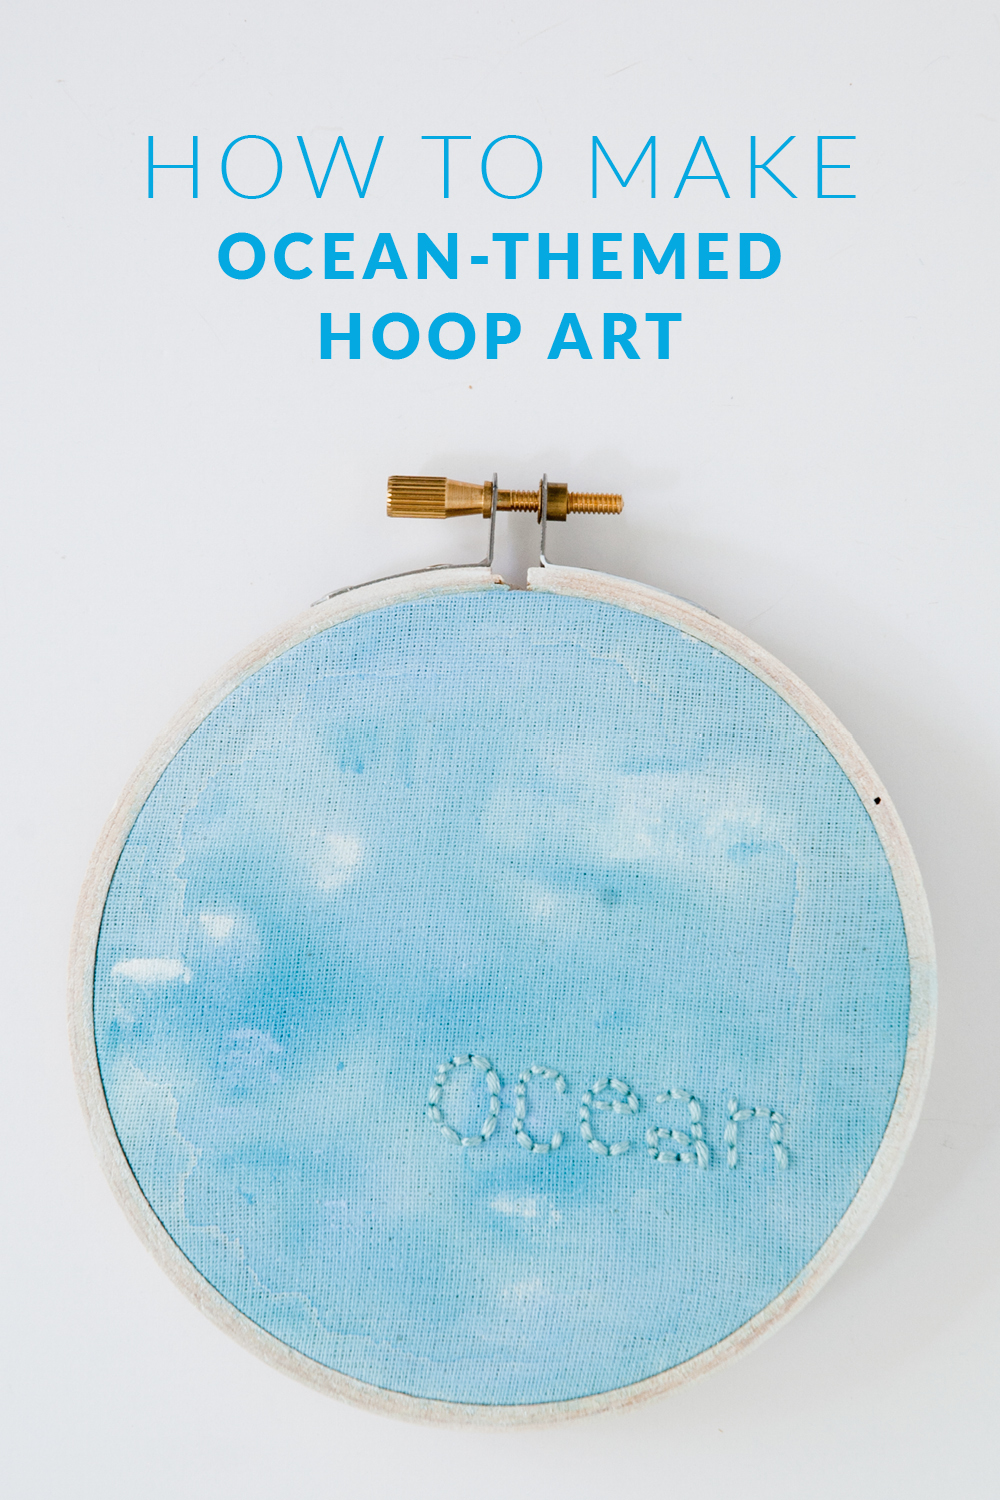 How to Make Ocean-themed Hoop Art